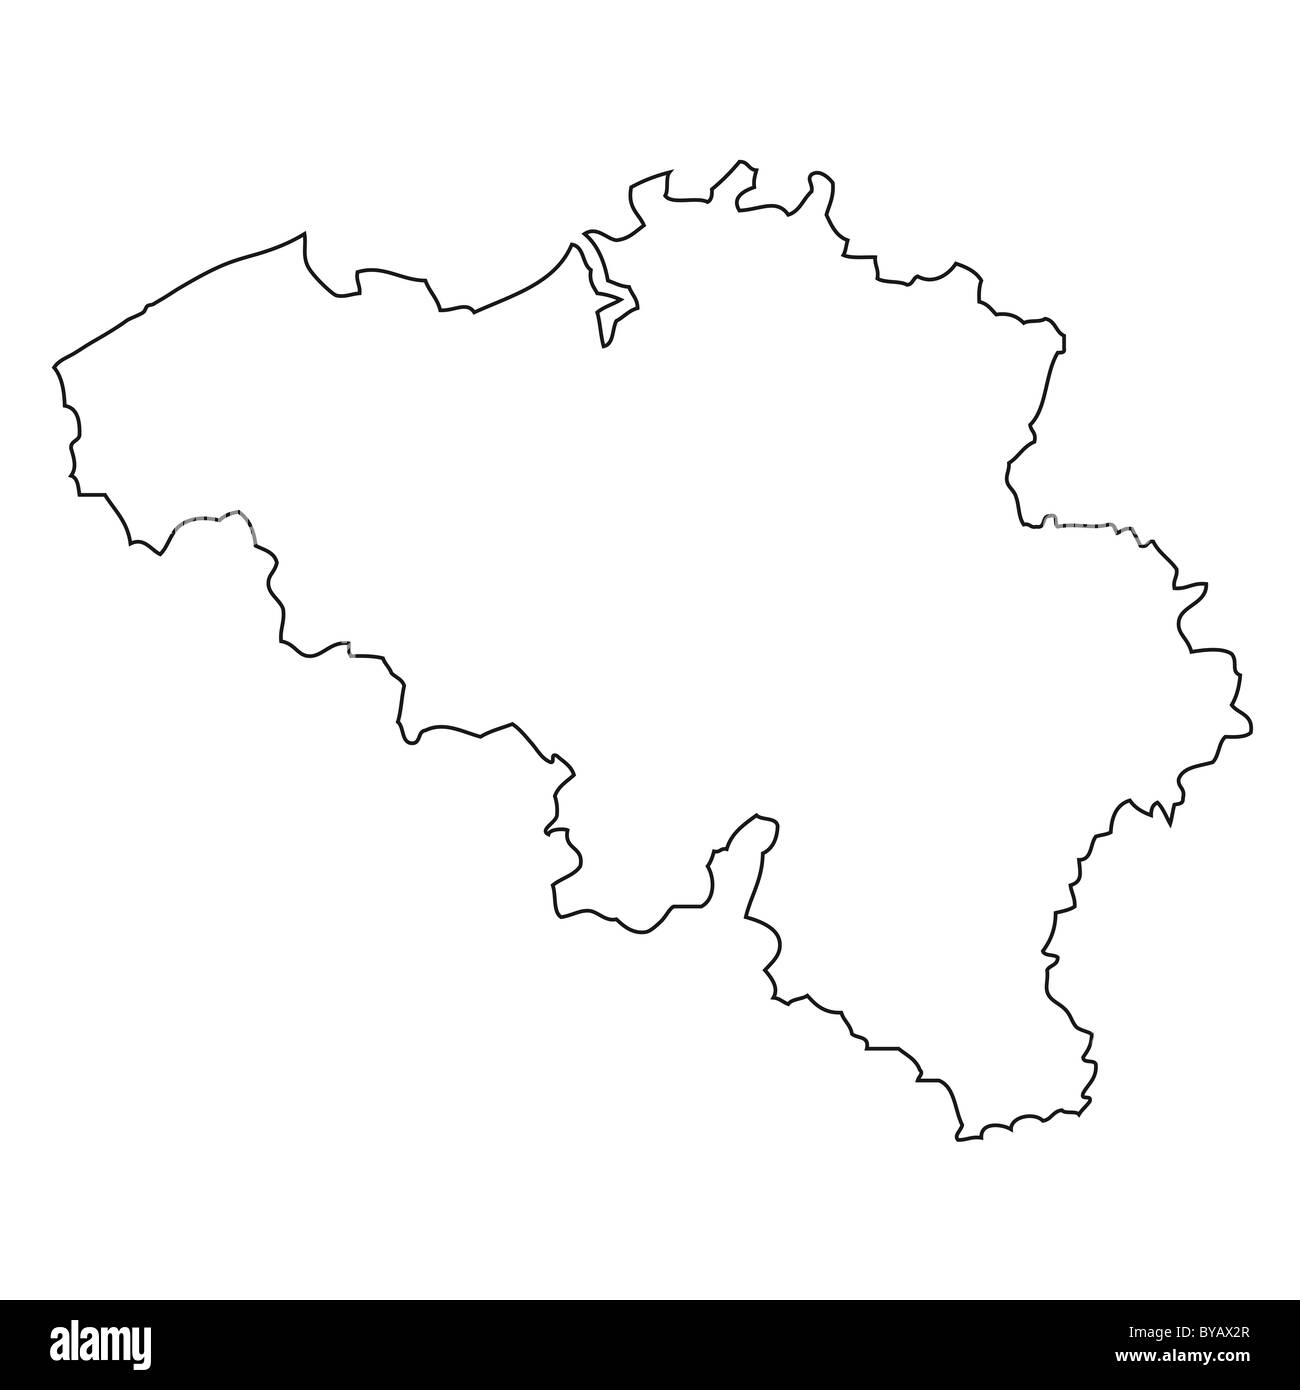 Outline, map of Belgium Stock Photo - Alamy